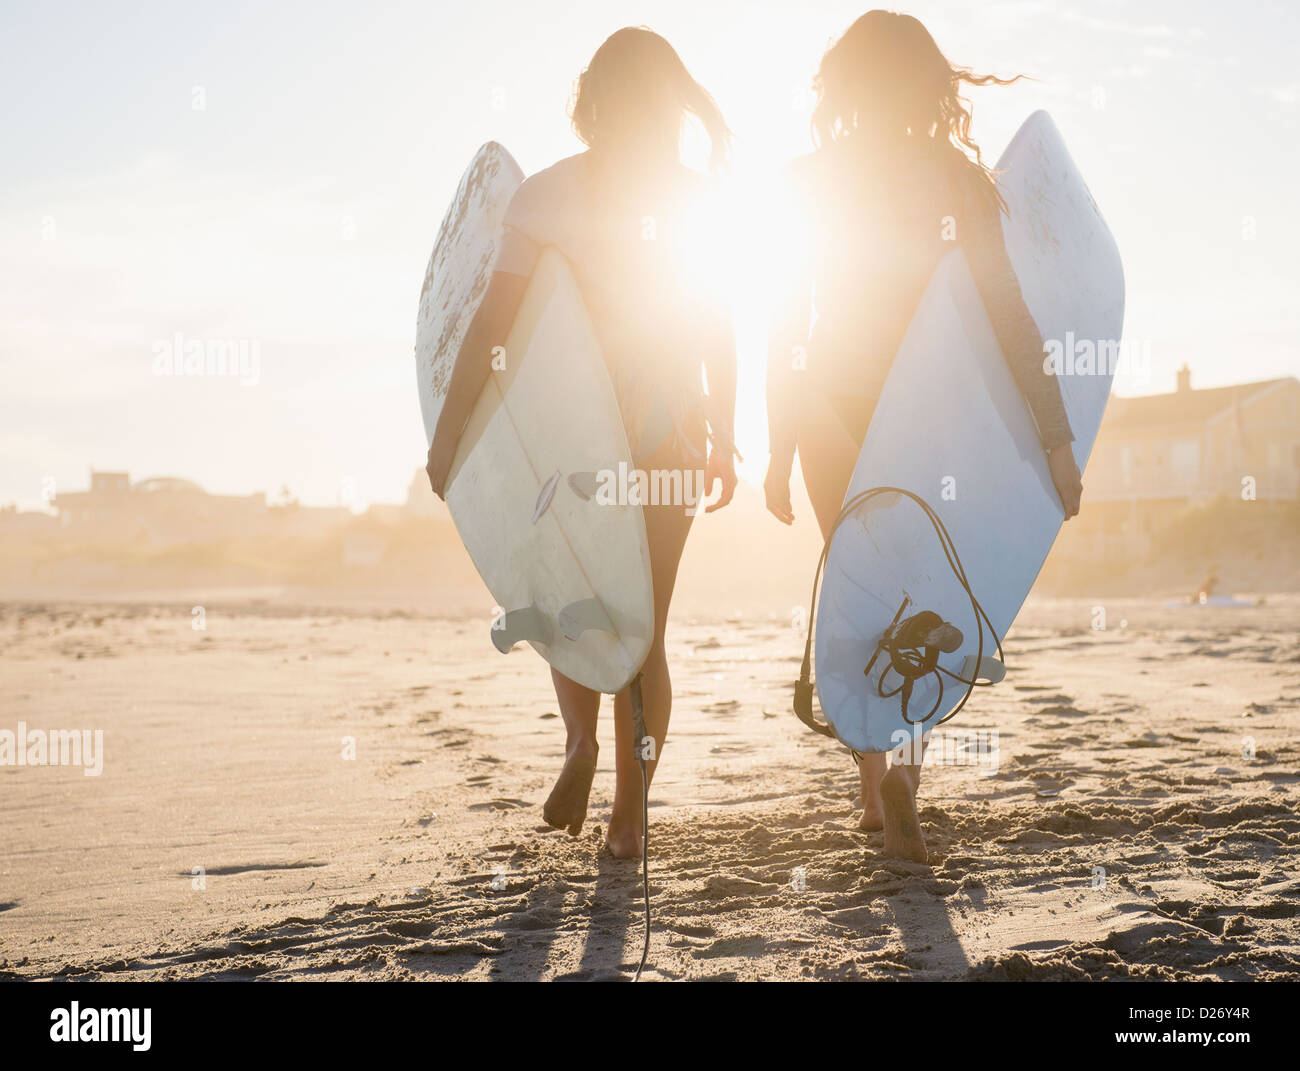 USA, New York State, Rockaway Beach, Two female surfers walking on beach at sunset Stock Photo